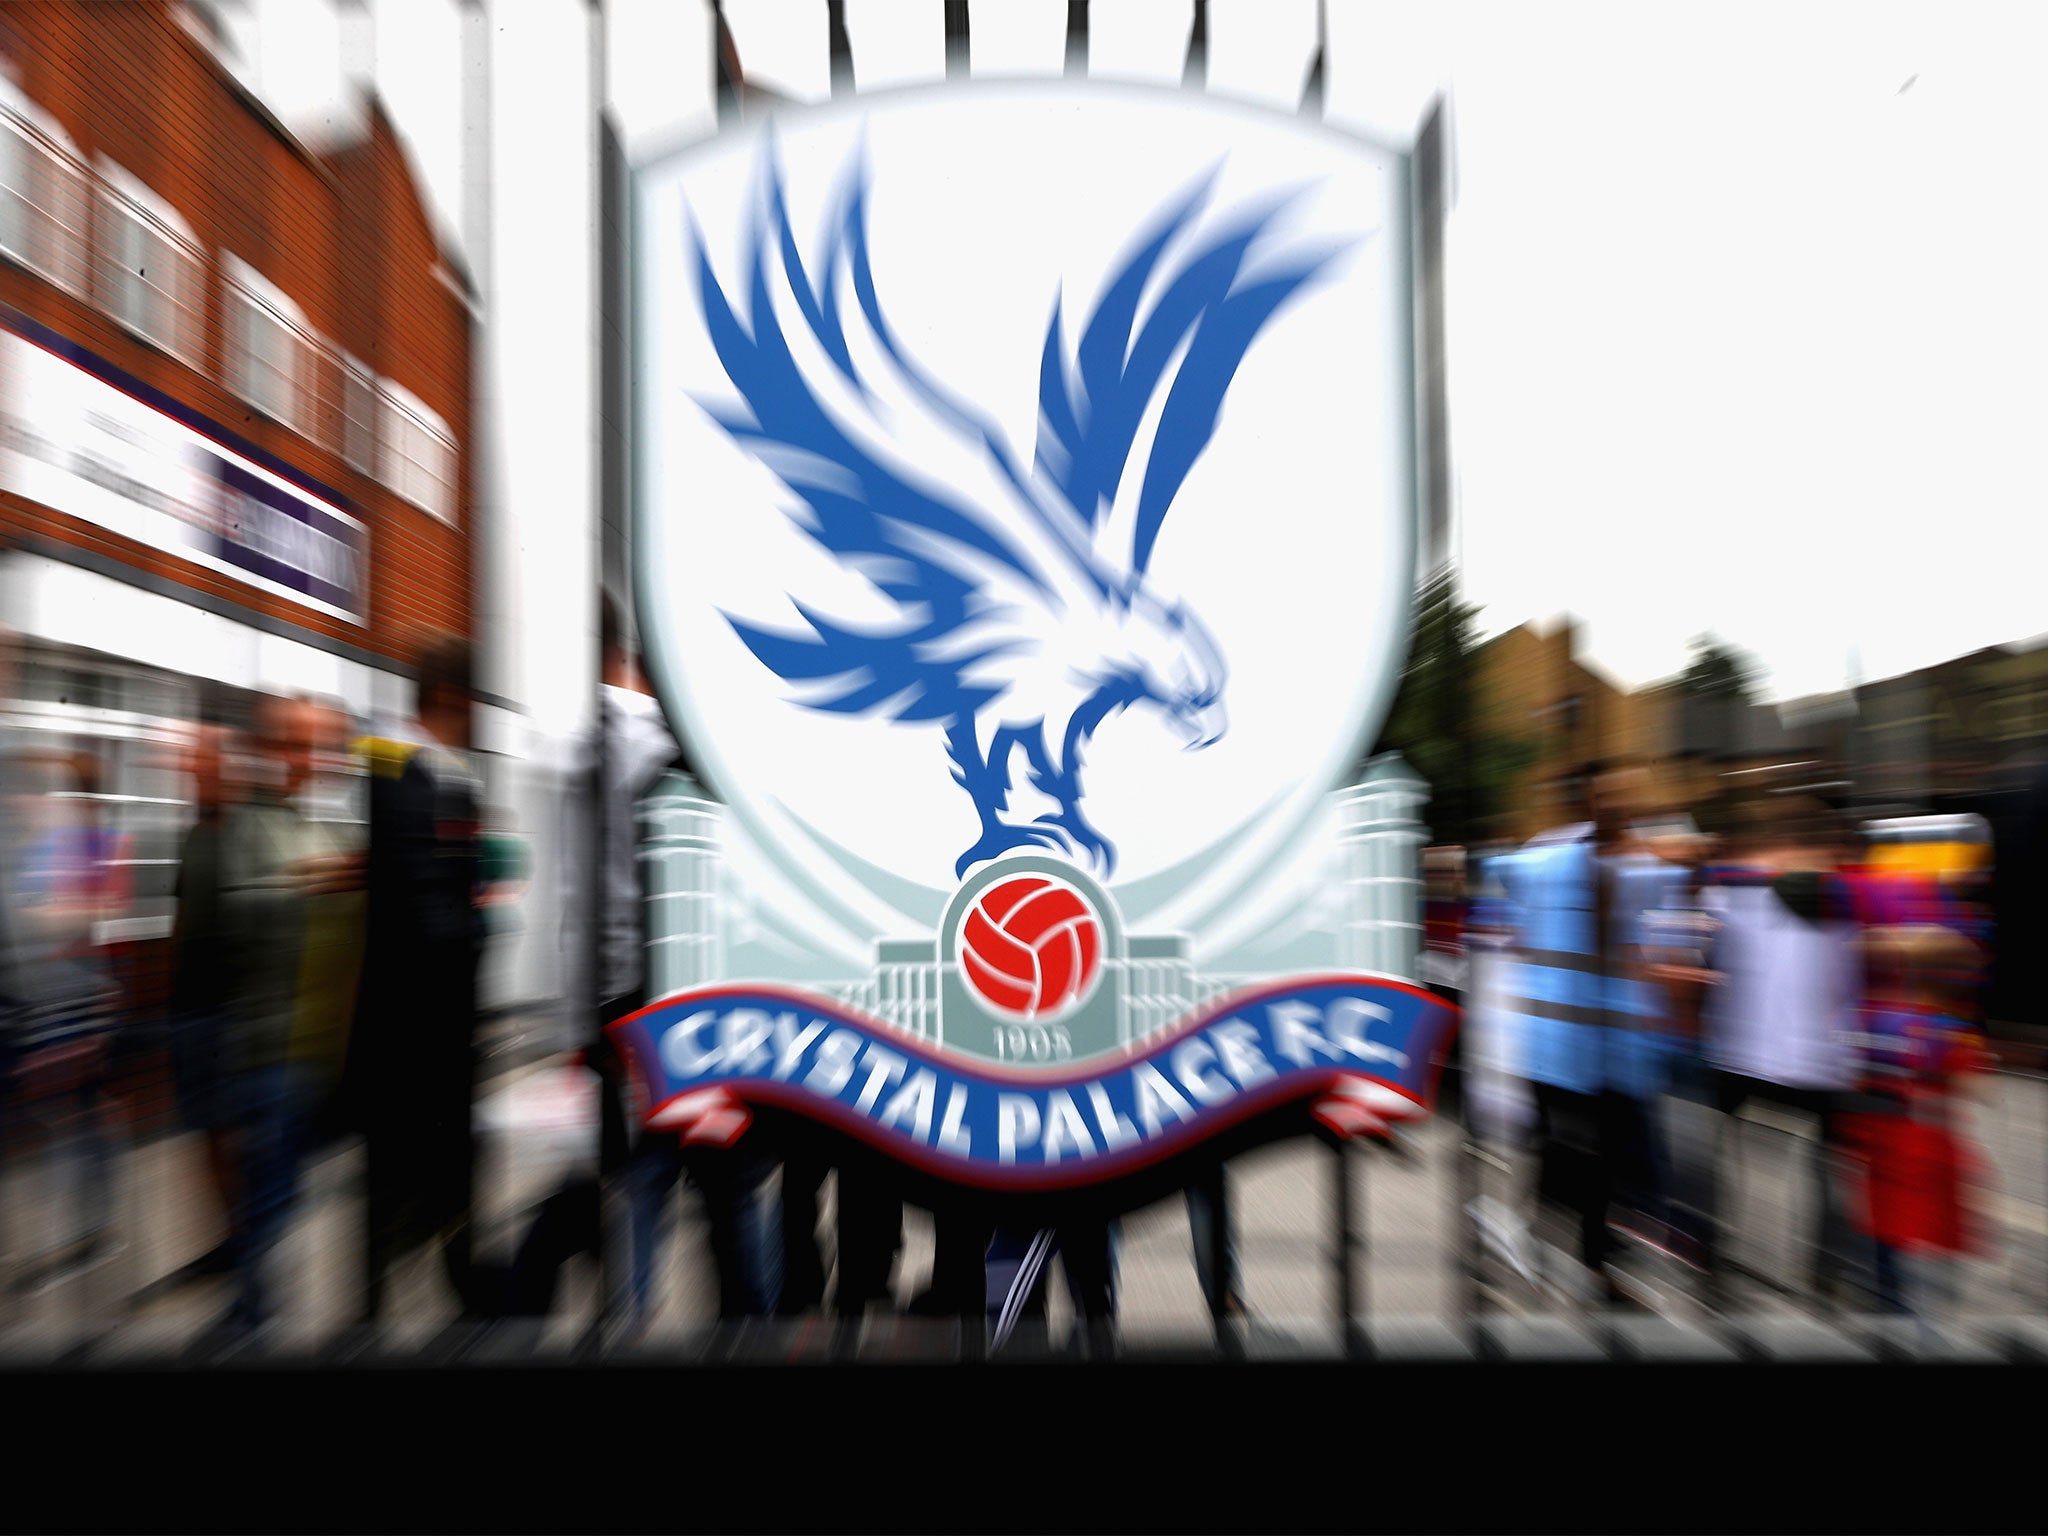 Crystal Palace return to Selhurst Park